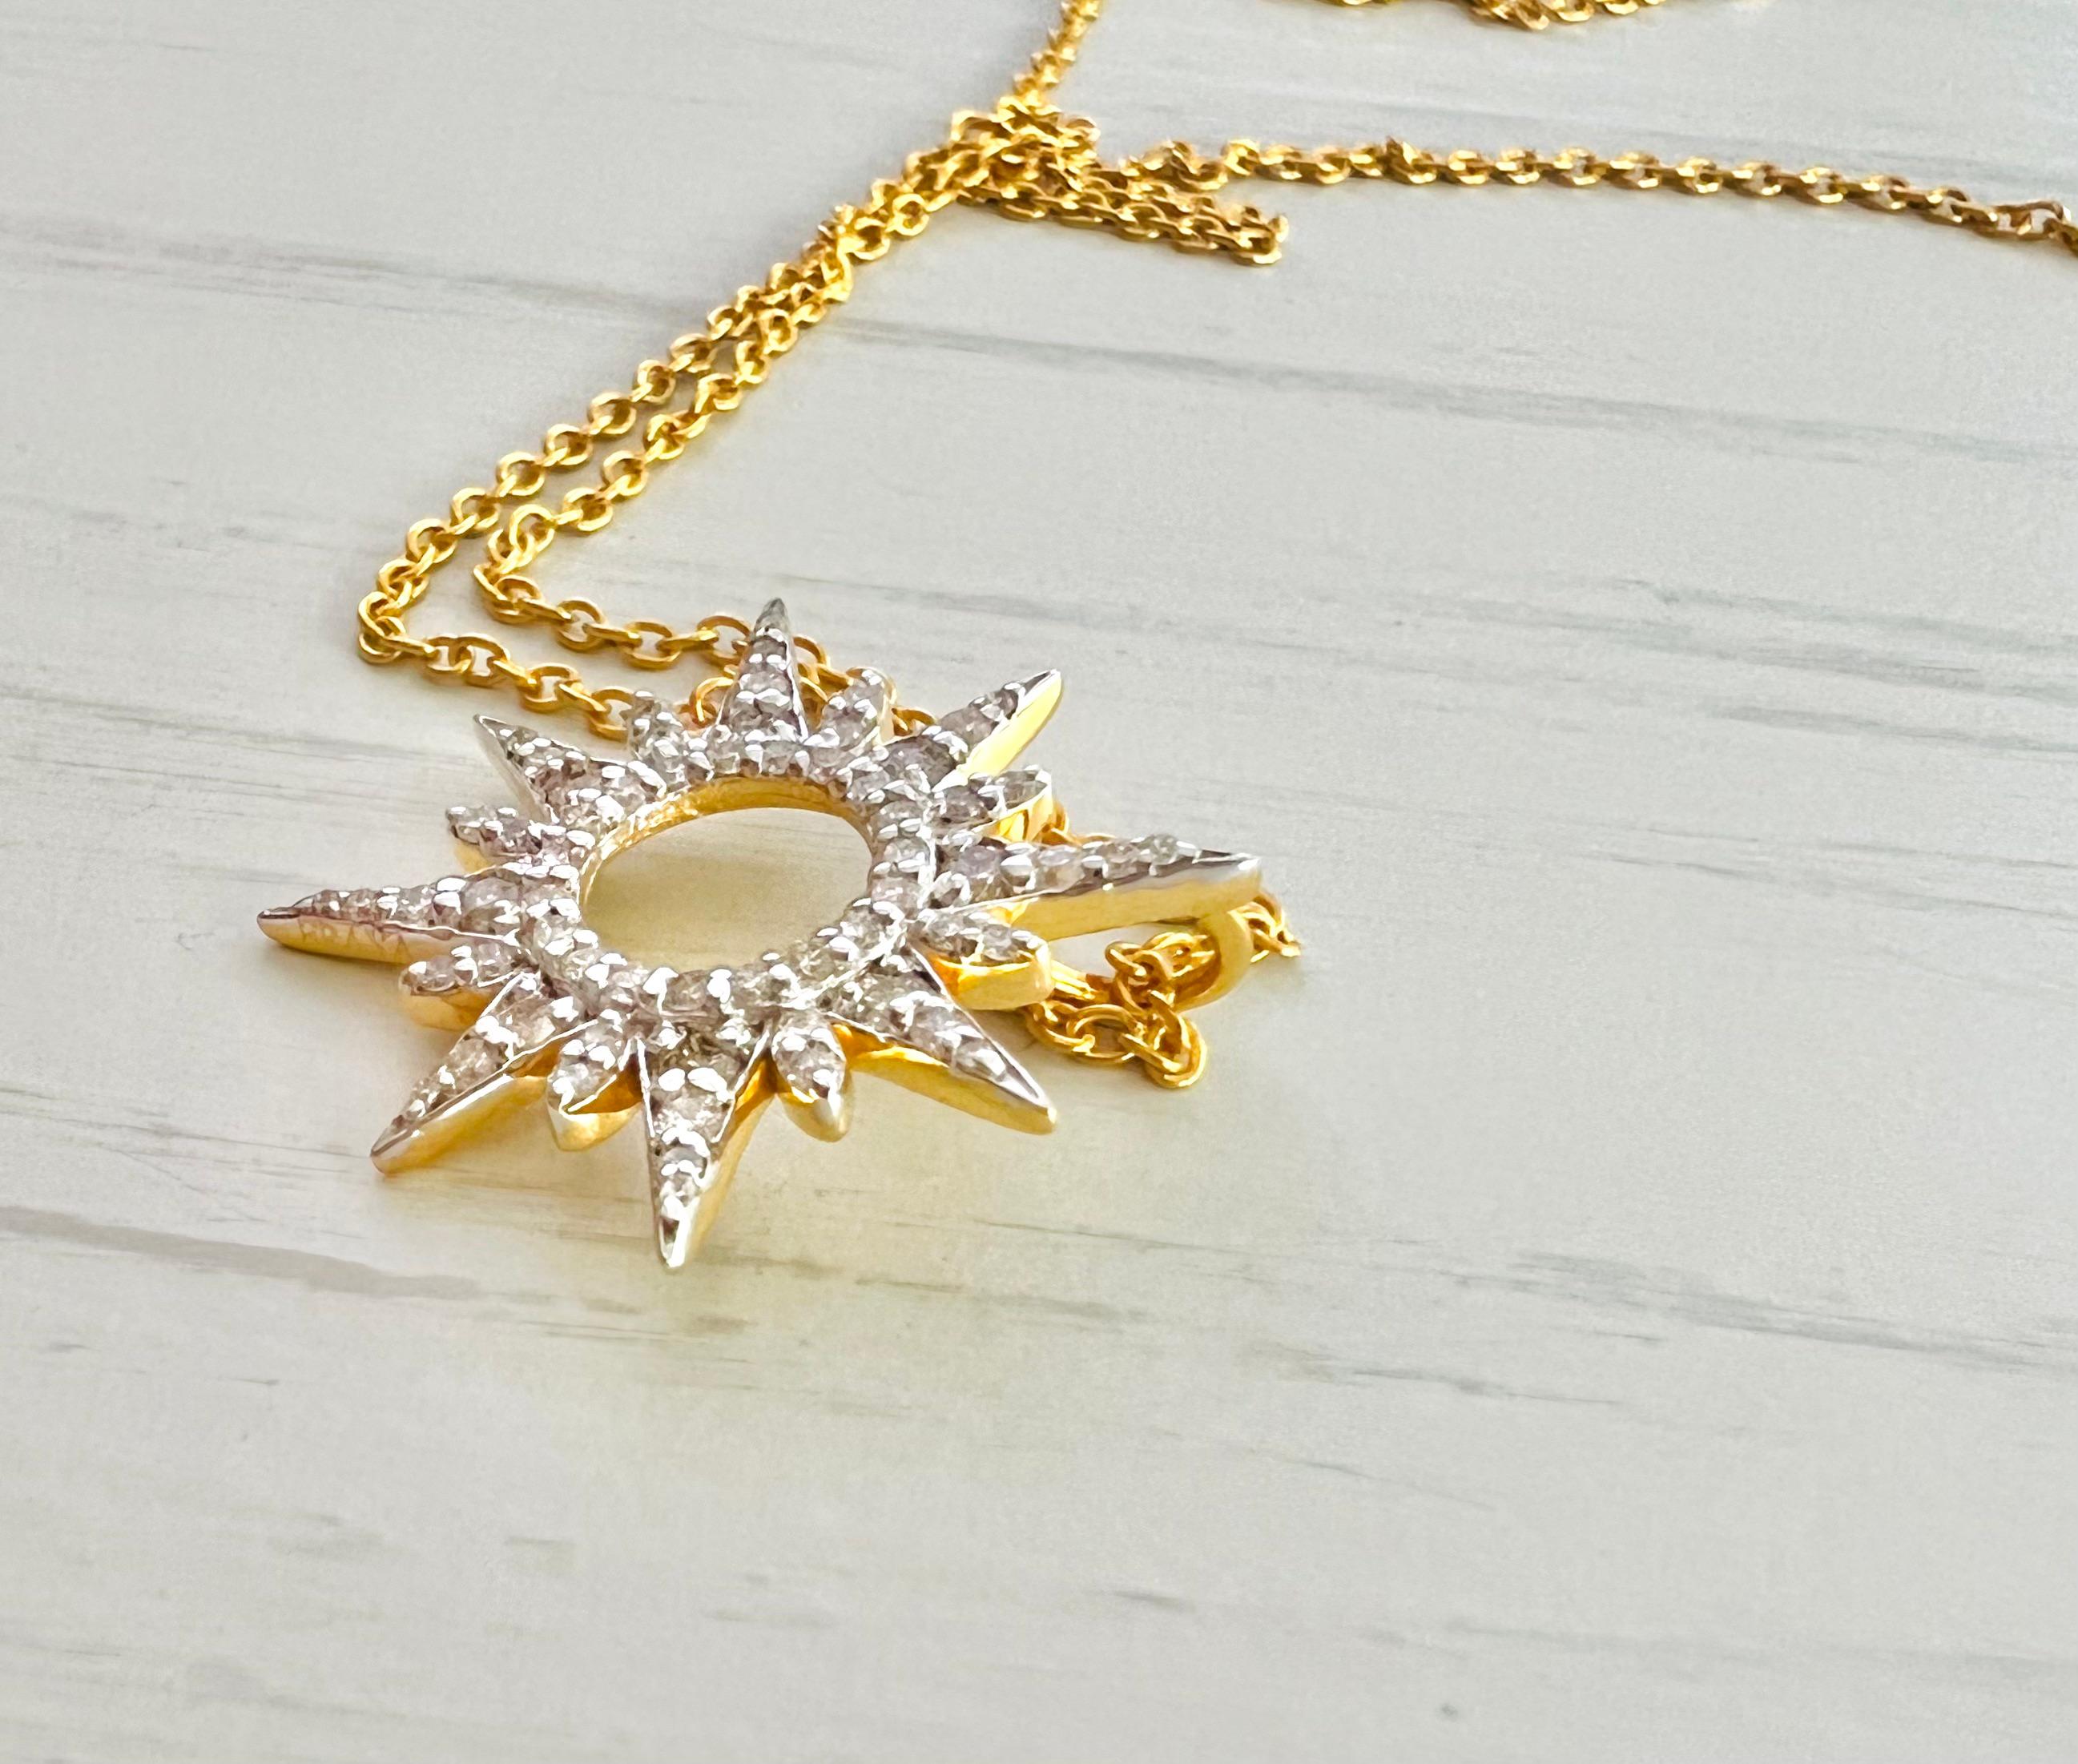 Brilliant Cut Sunburst Diamond Necklace For Sale